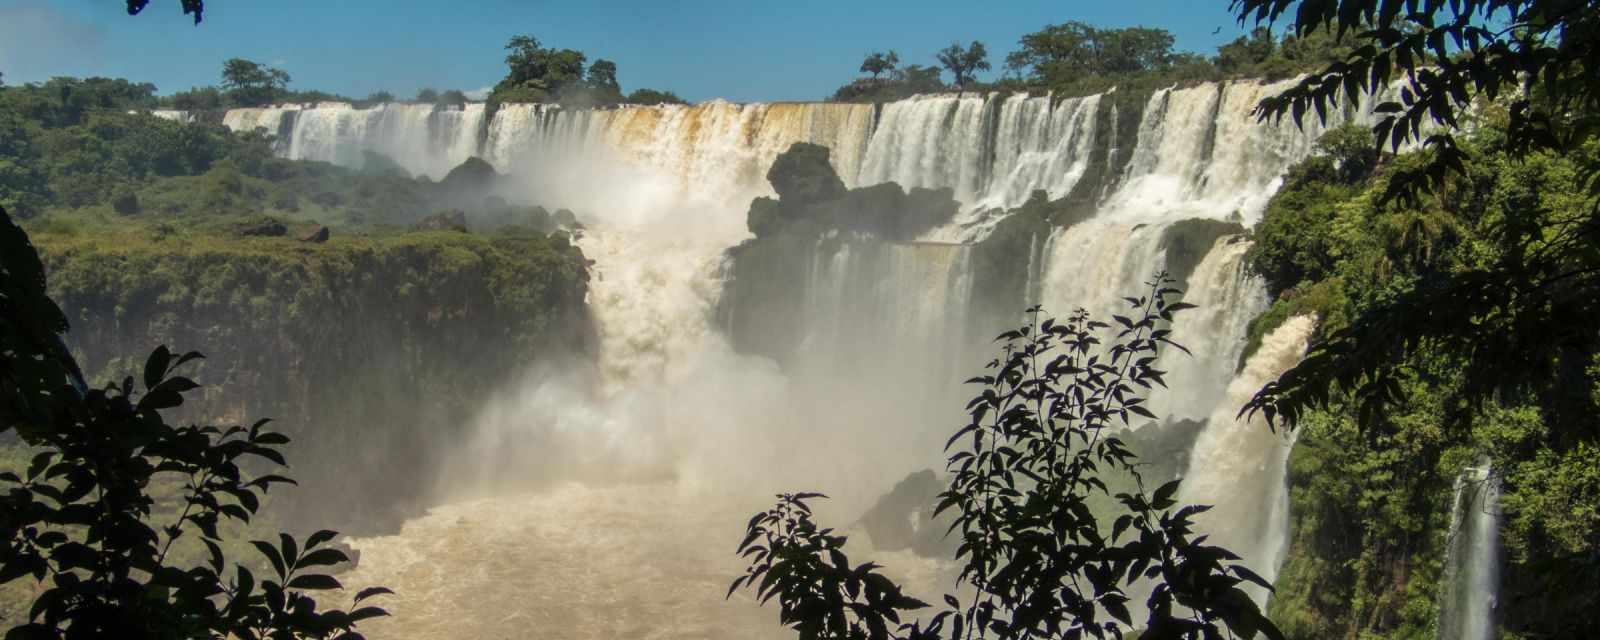 The Powerful Iguazu Falls - Tips - Hiking Trails - Tours